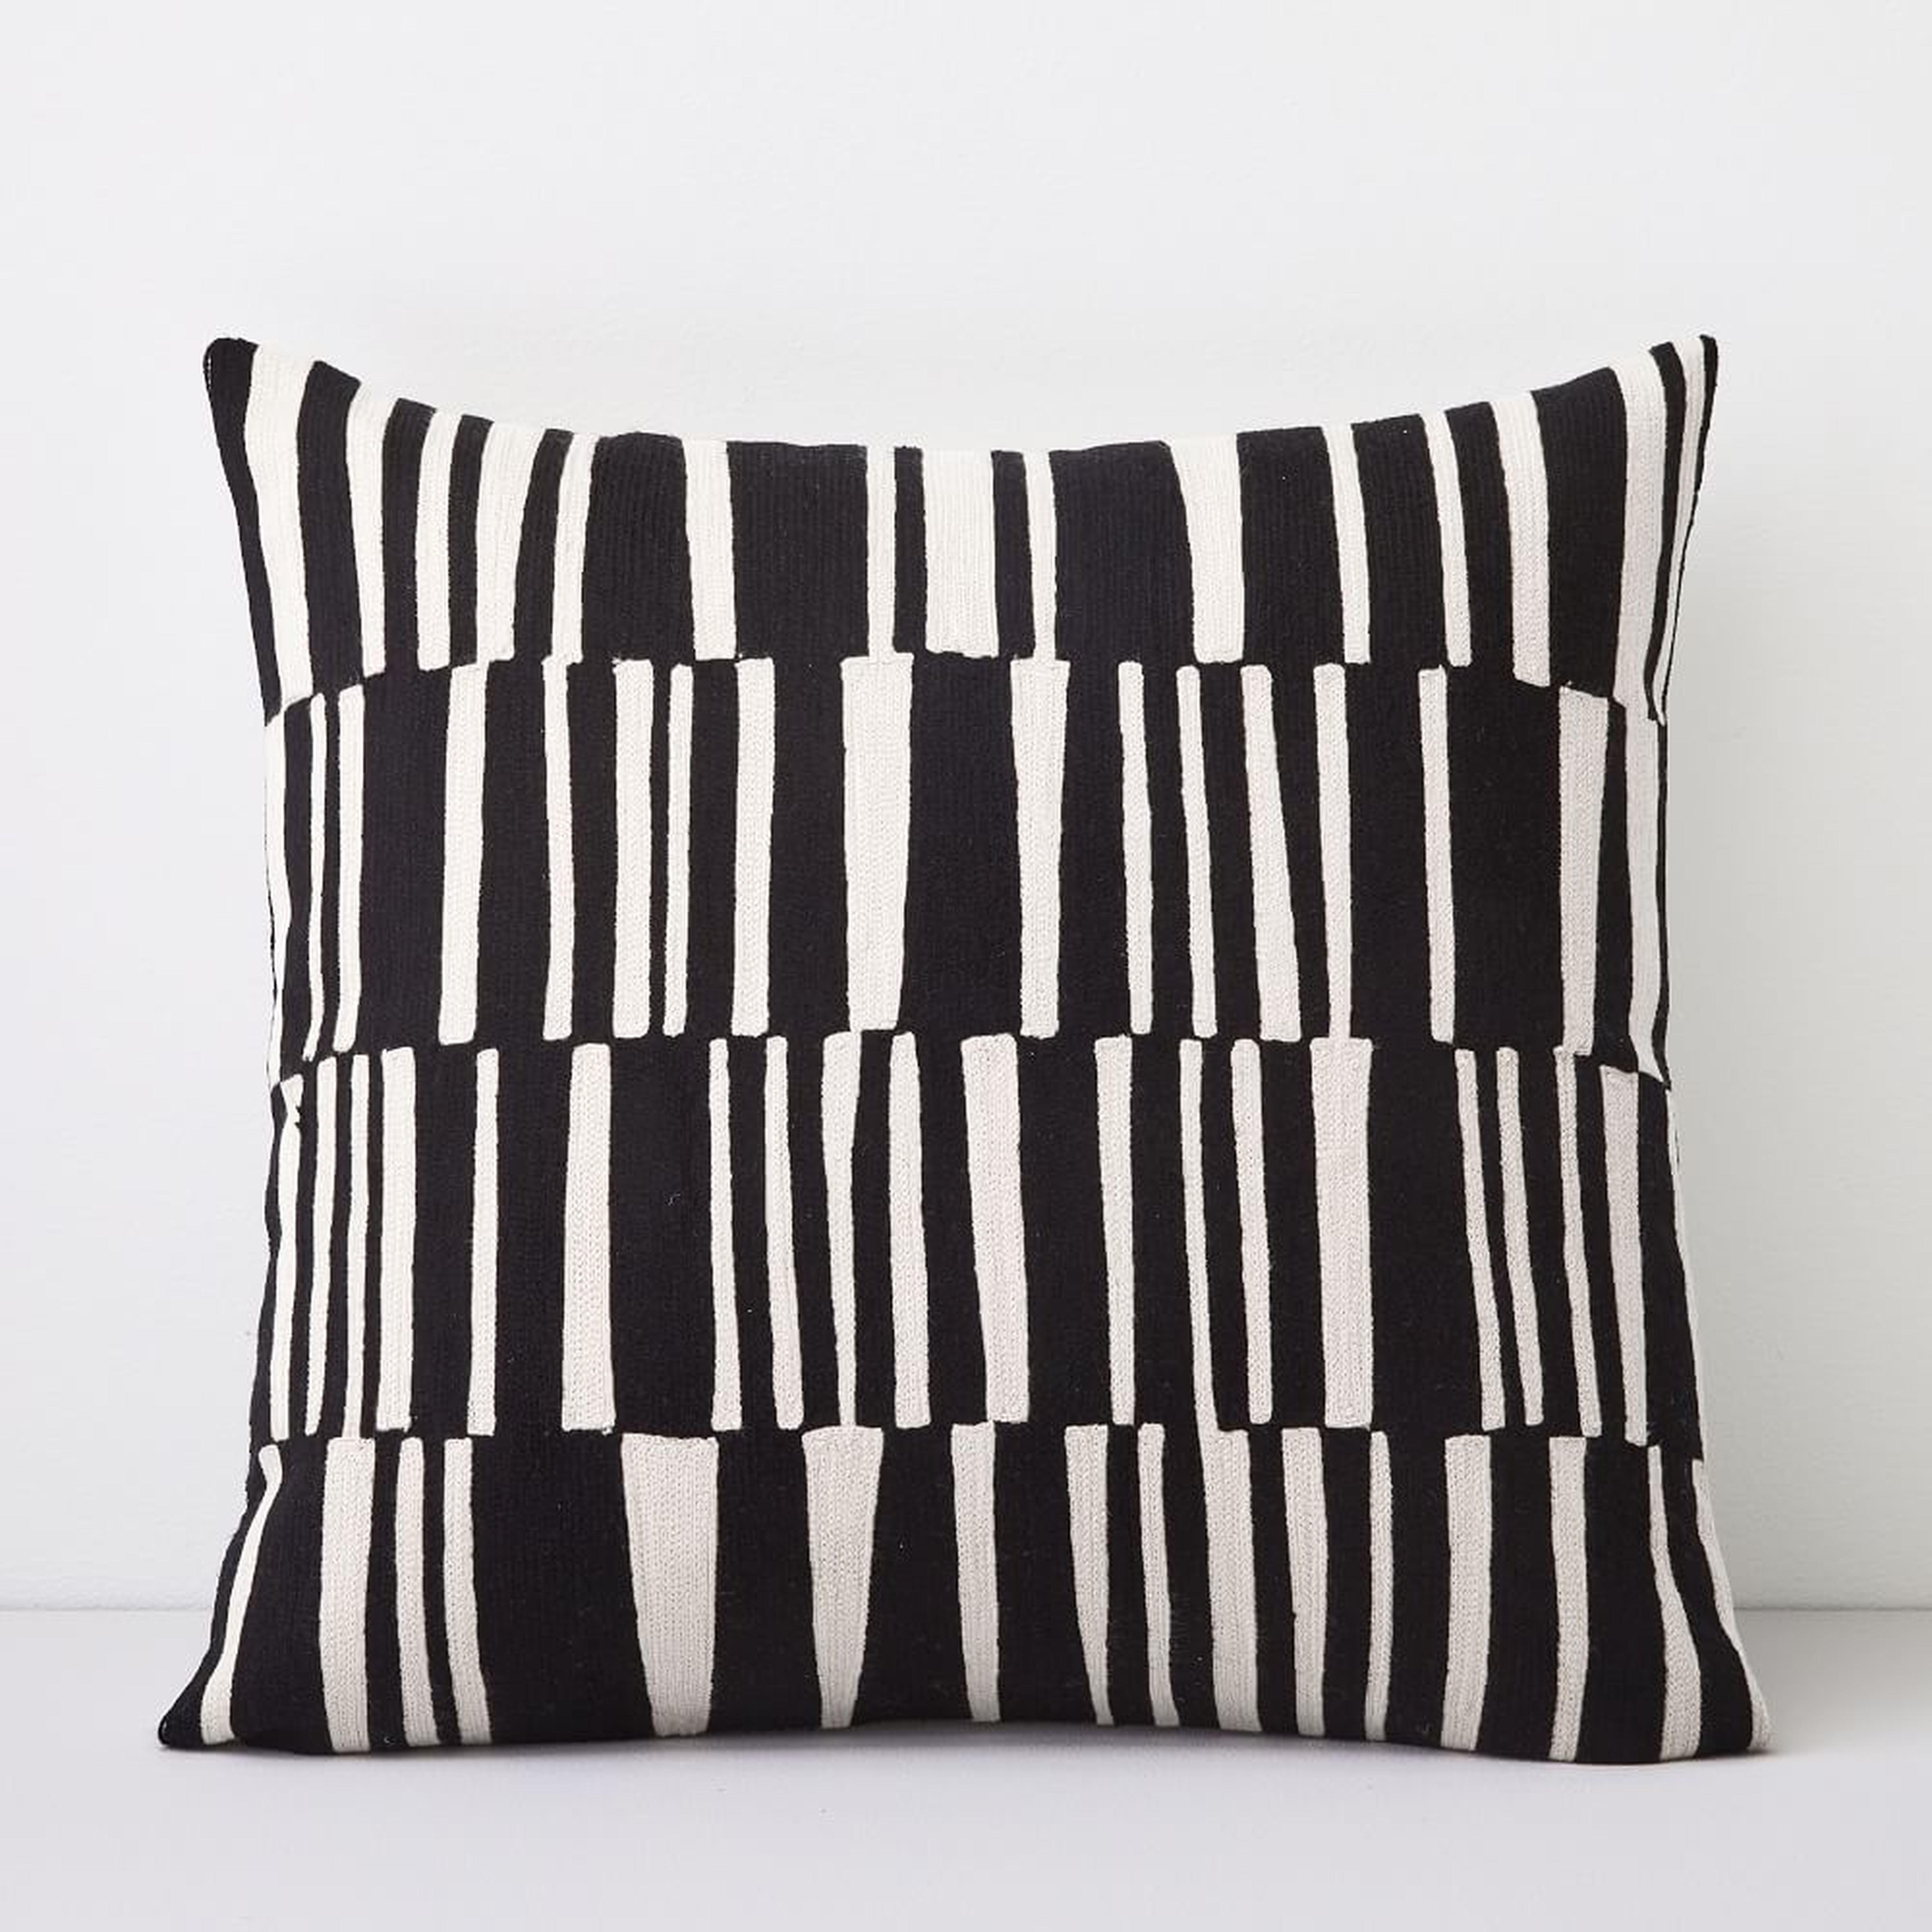 Crewel Linear Pillow Cover, Black, 20"x20" - West Elm